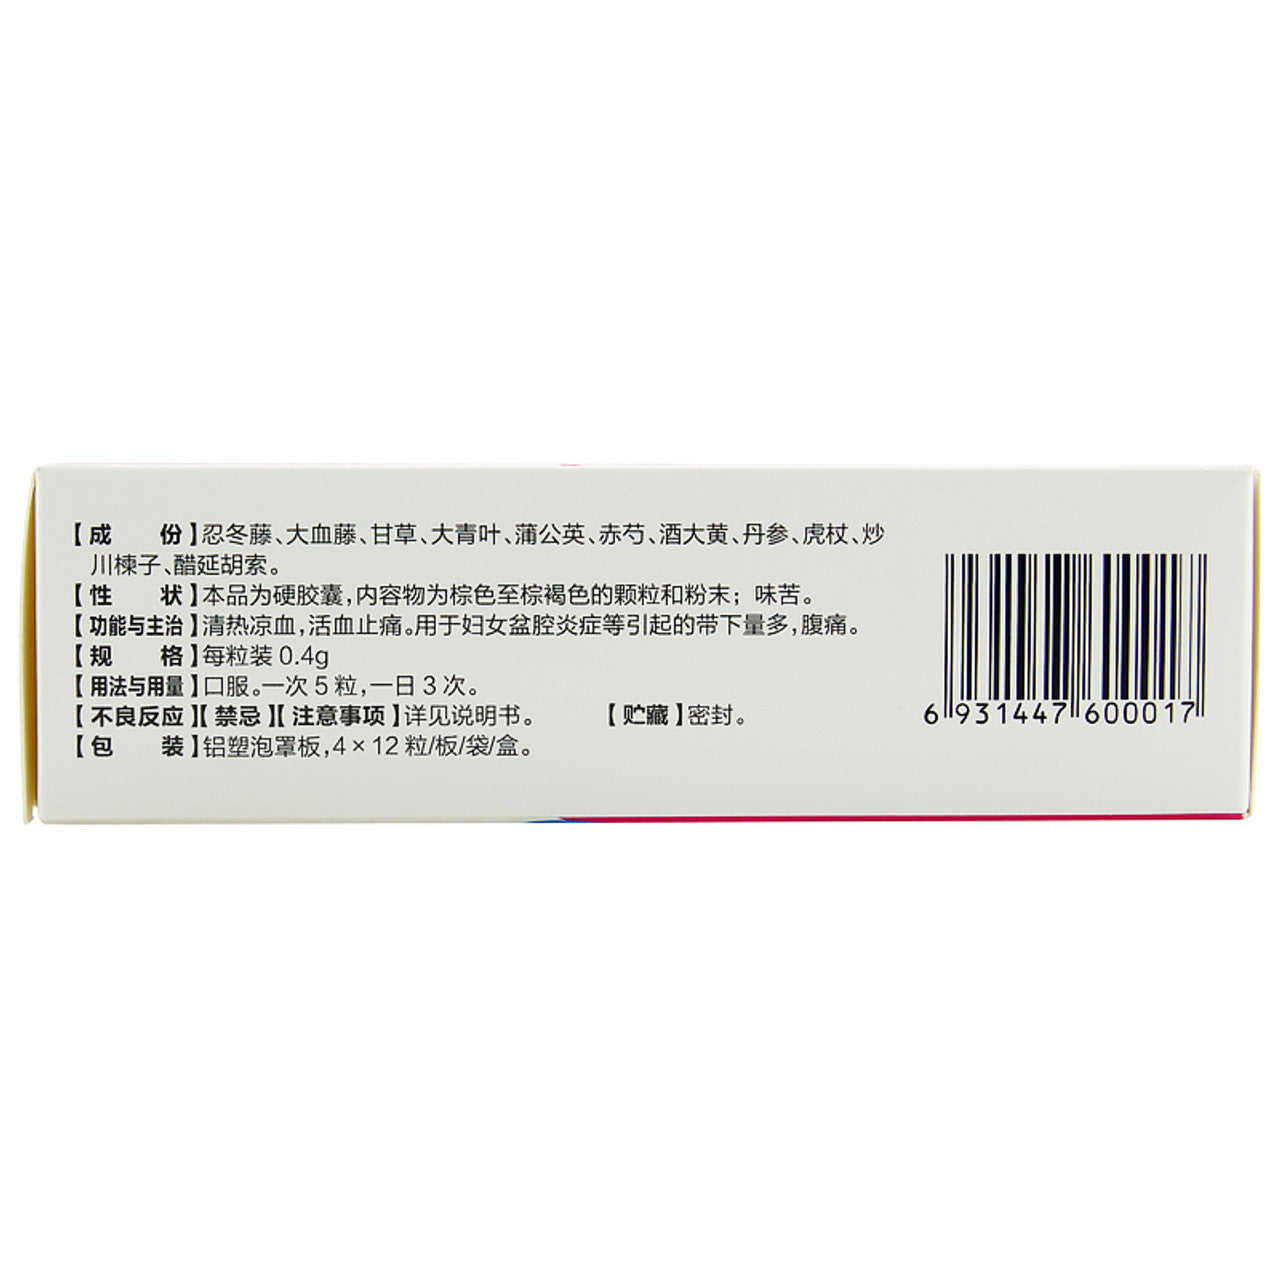 China Herb. Brand Dongke. Fuyanshu Jiaonang or Fuyanshu Capsules or Fu Yan Shu Jiao Nang or Fu Yan Shu Capsules for Pelvic Inflammatory Disease